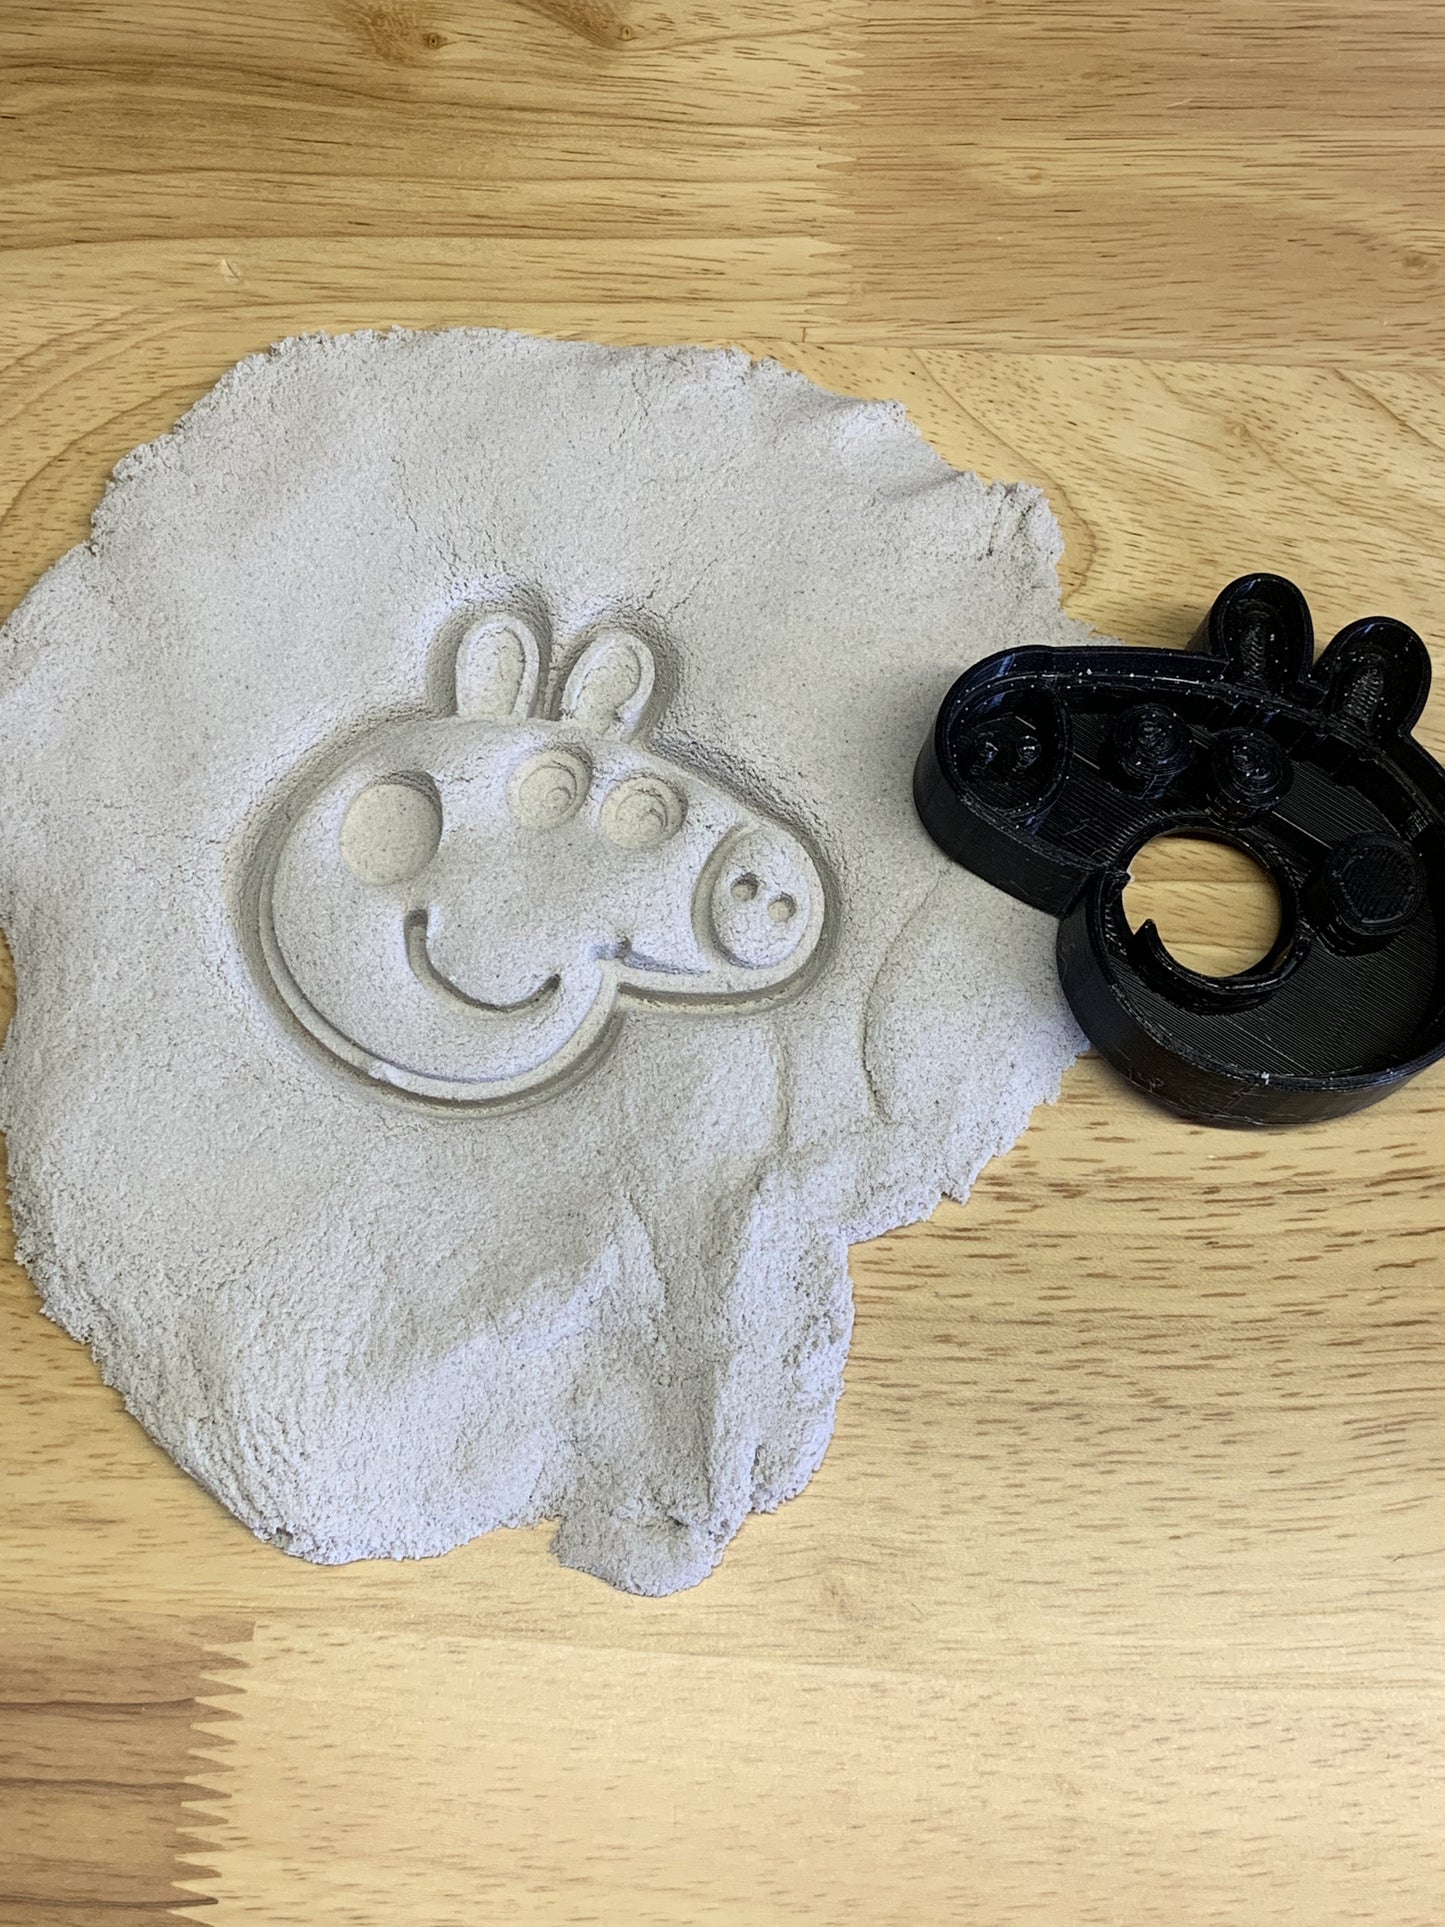 Peppa Pig Inspired Cookie Cutter | Senac LLC | polymer clay dough cutter clay shape jewelry cutters